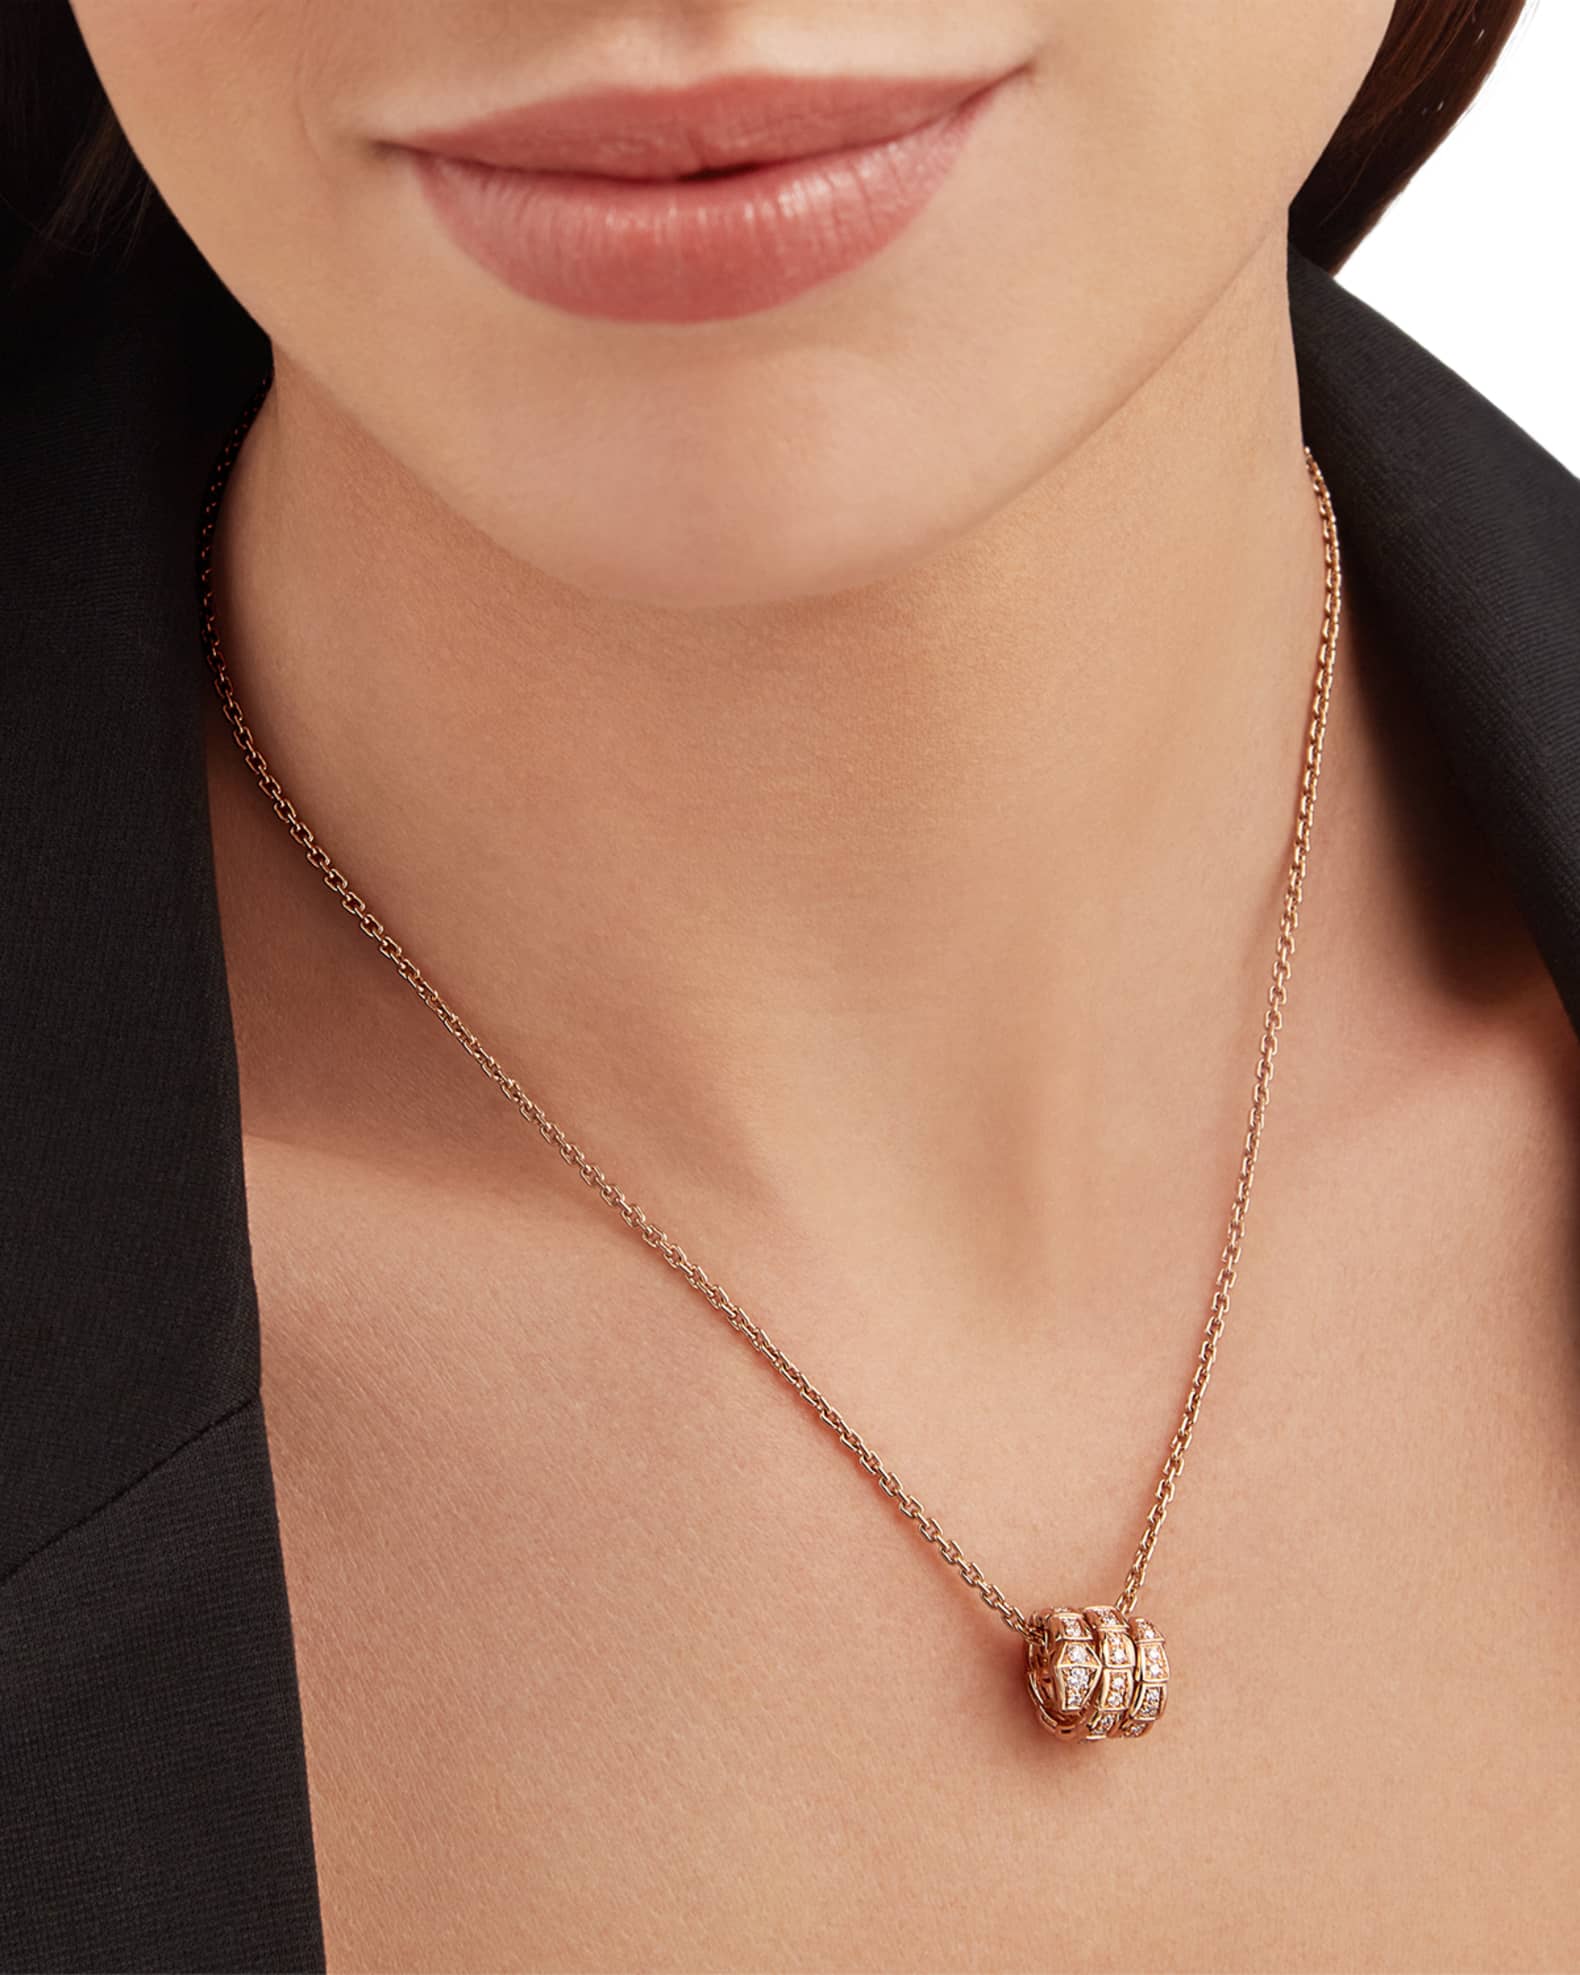 Rose gold Serpenti Viper Necklace with 0.13 ct Diamonds